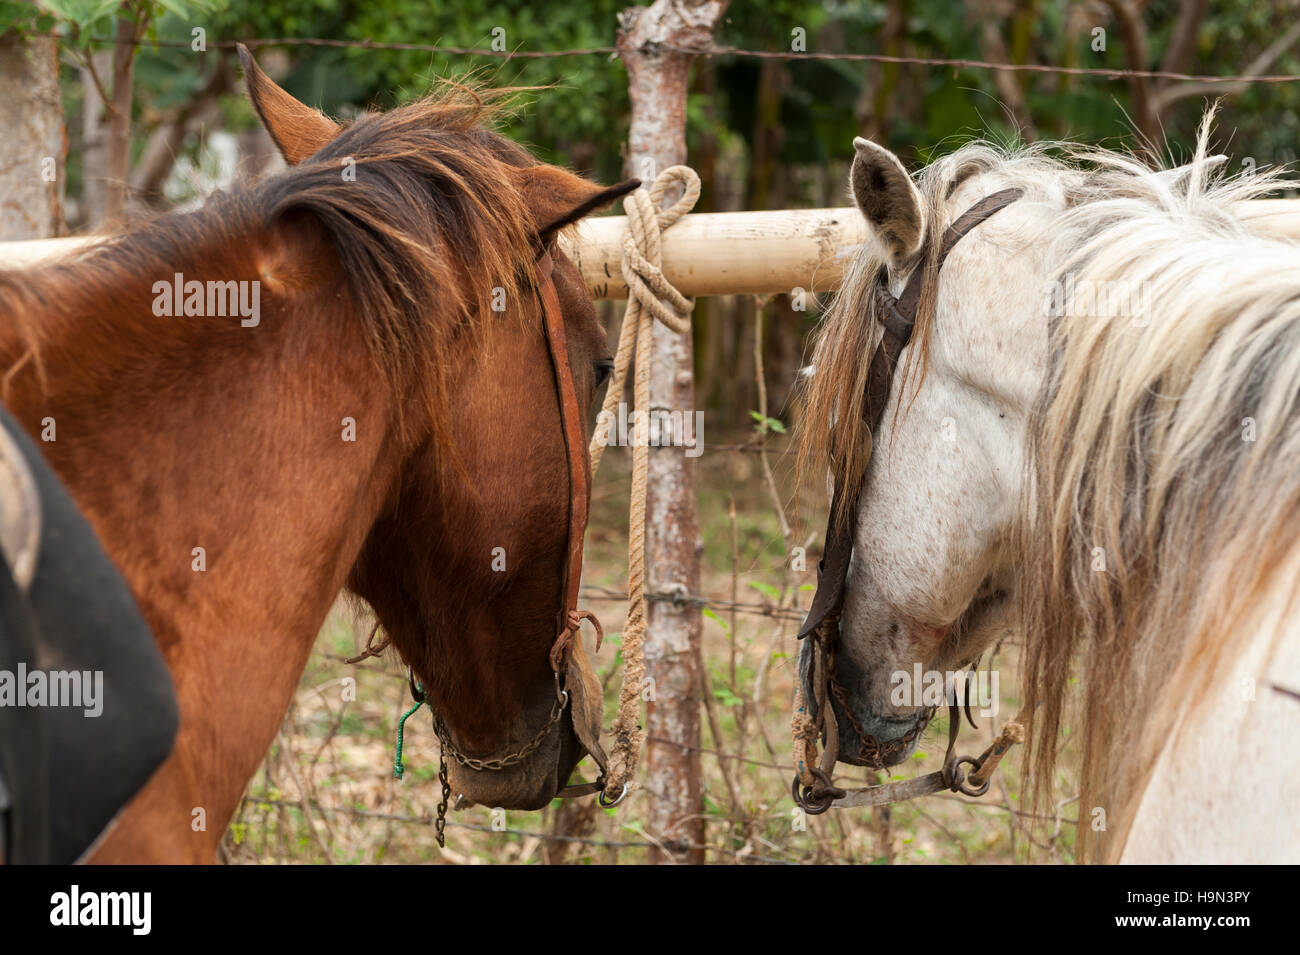 Saddled horses on Trinidad countryside in Cuba Stock Photo